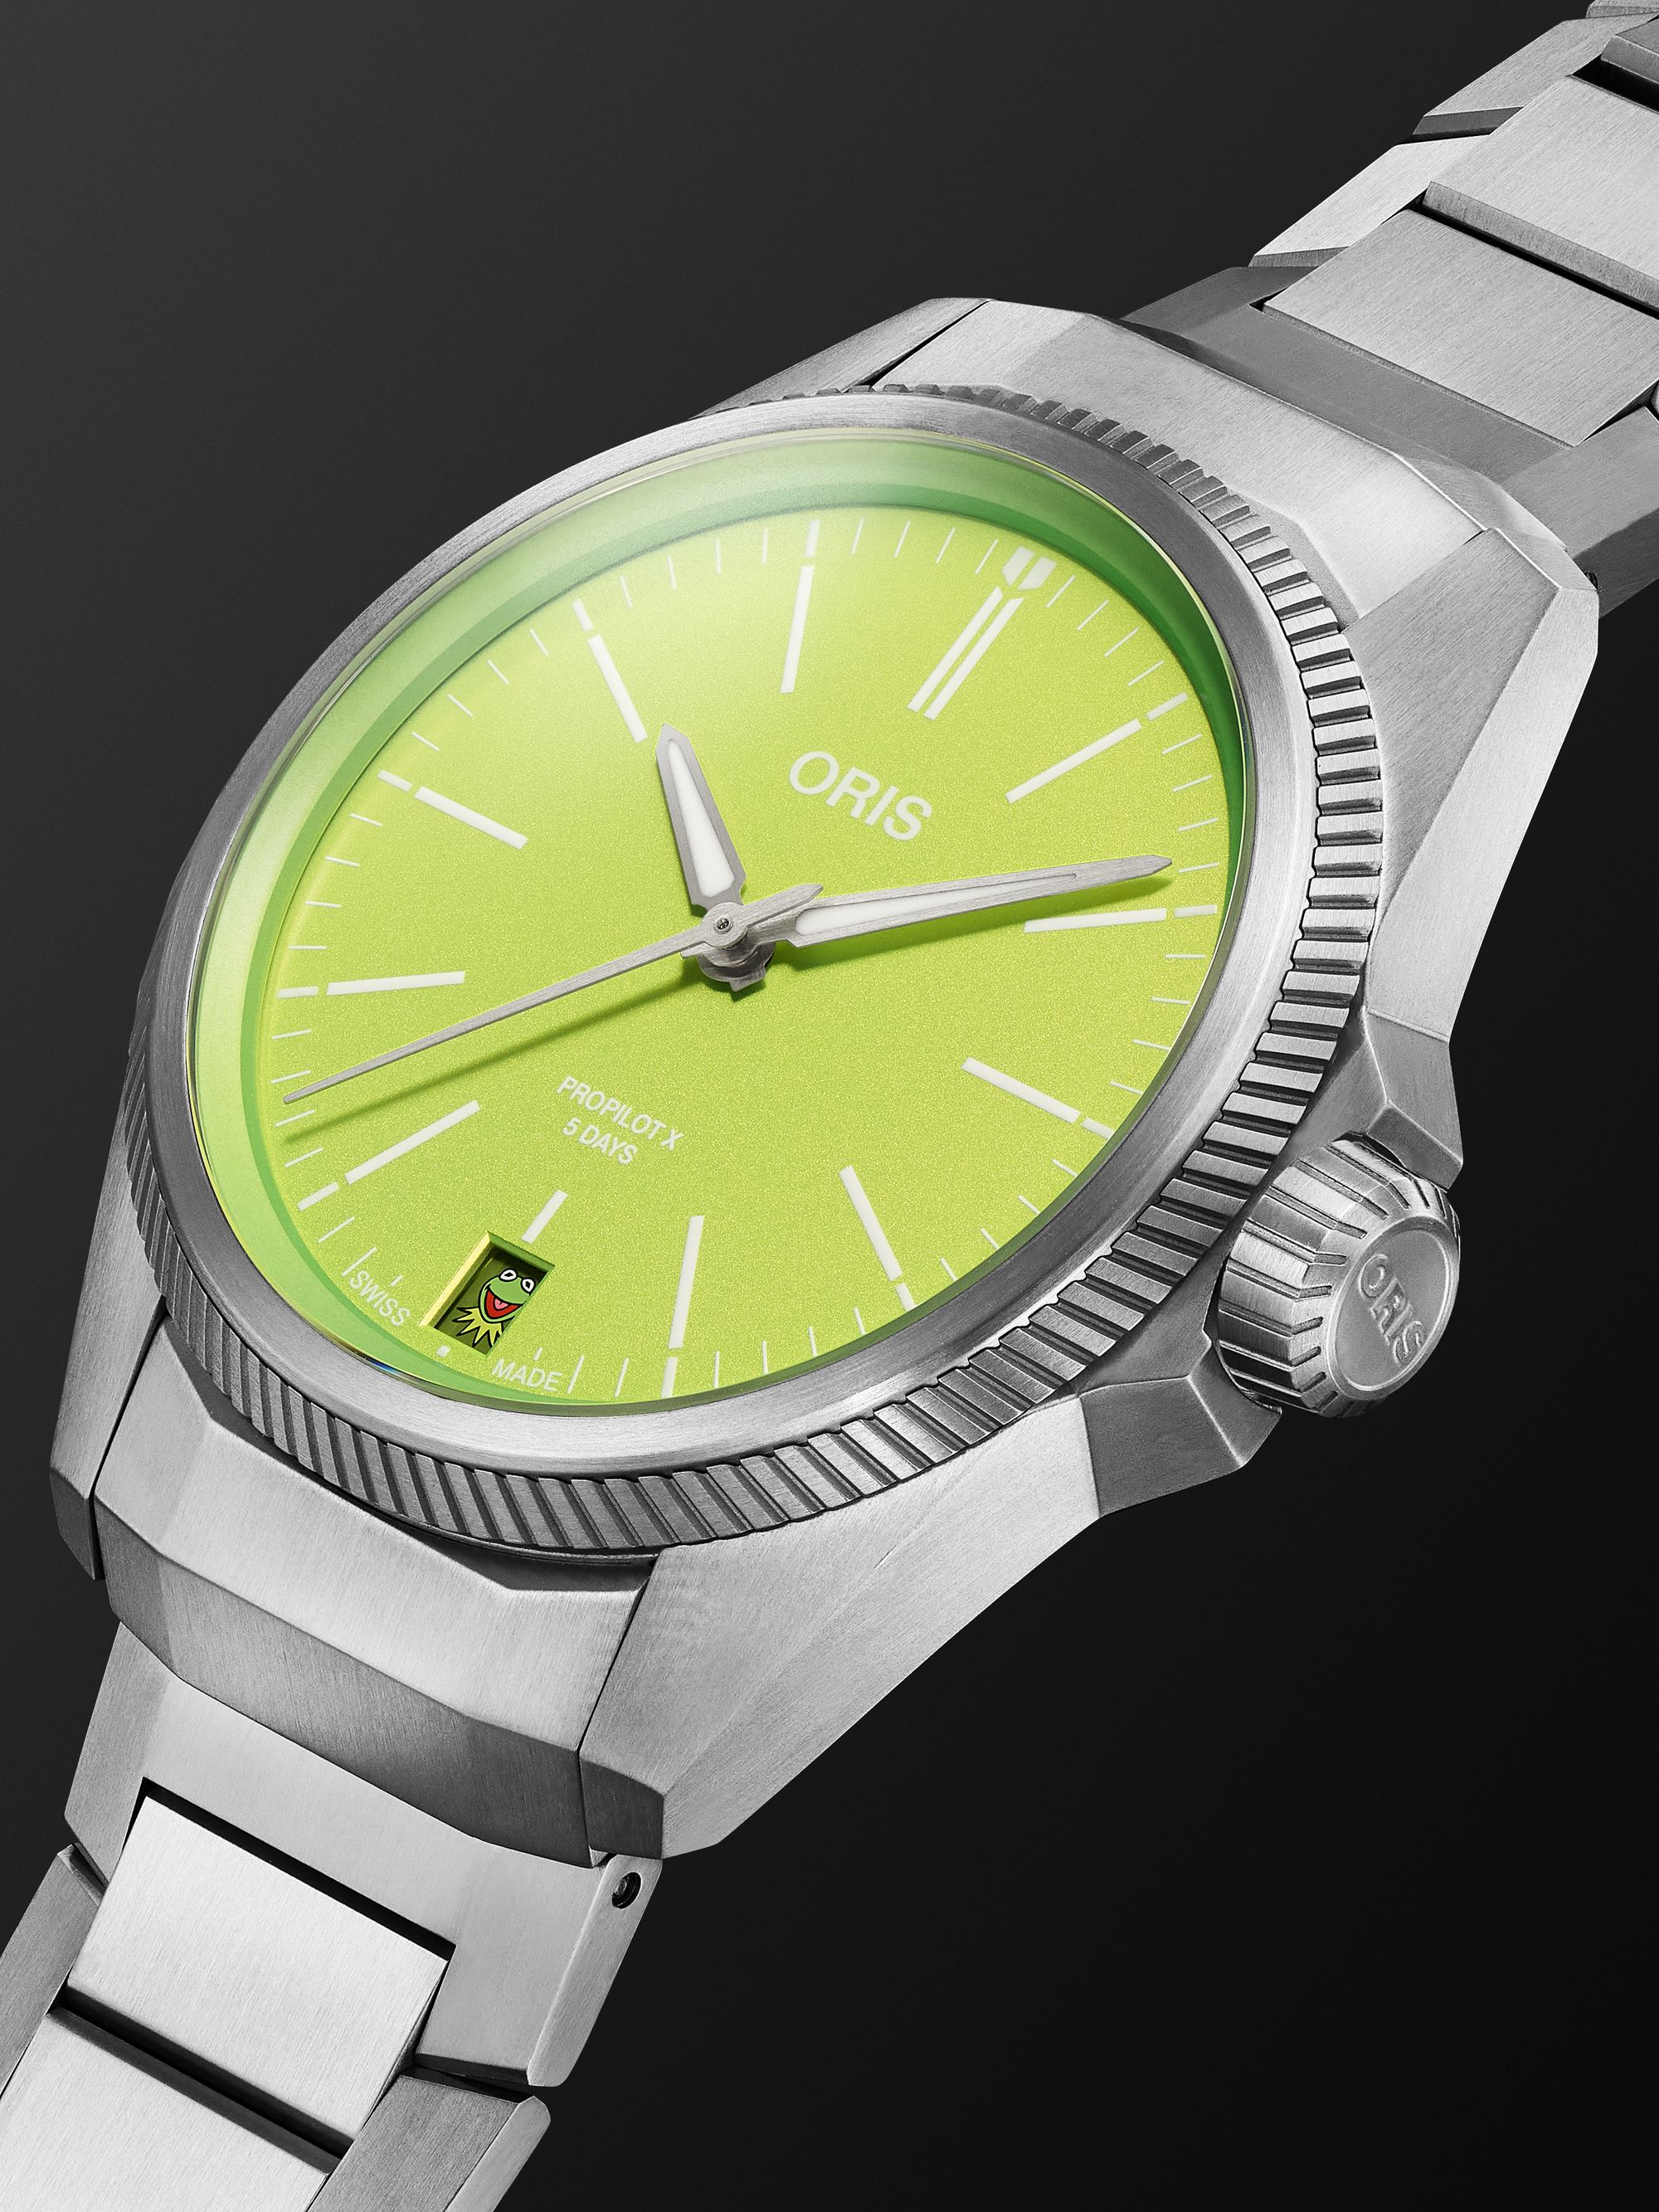 ORIS ProPilot X Kermit Limited Edition 39mm Titanium Watch, Ref. No. 01 400 7778 7157-07 7 20 01TLCGreen